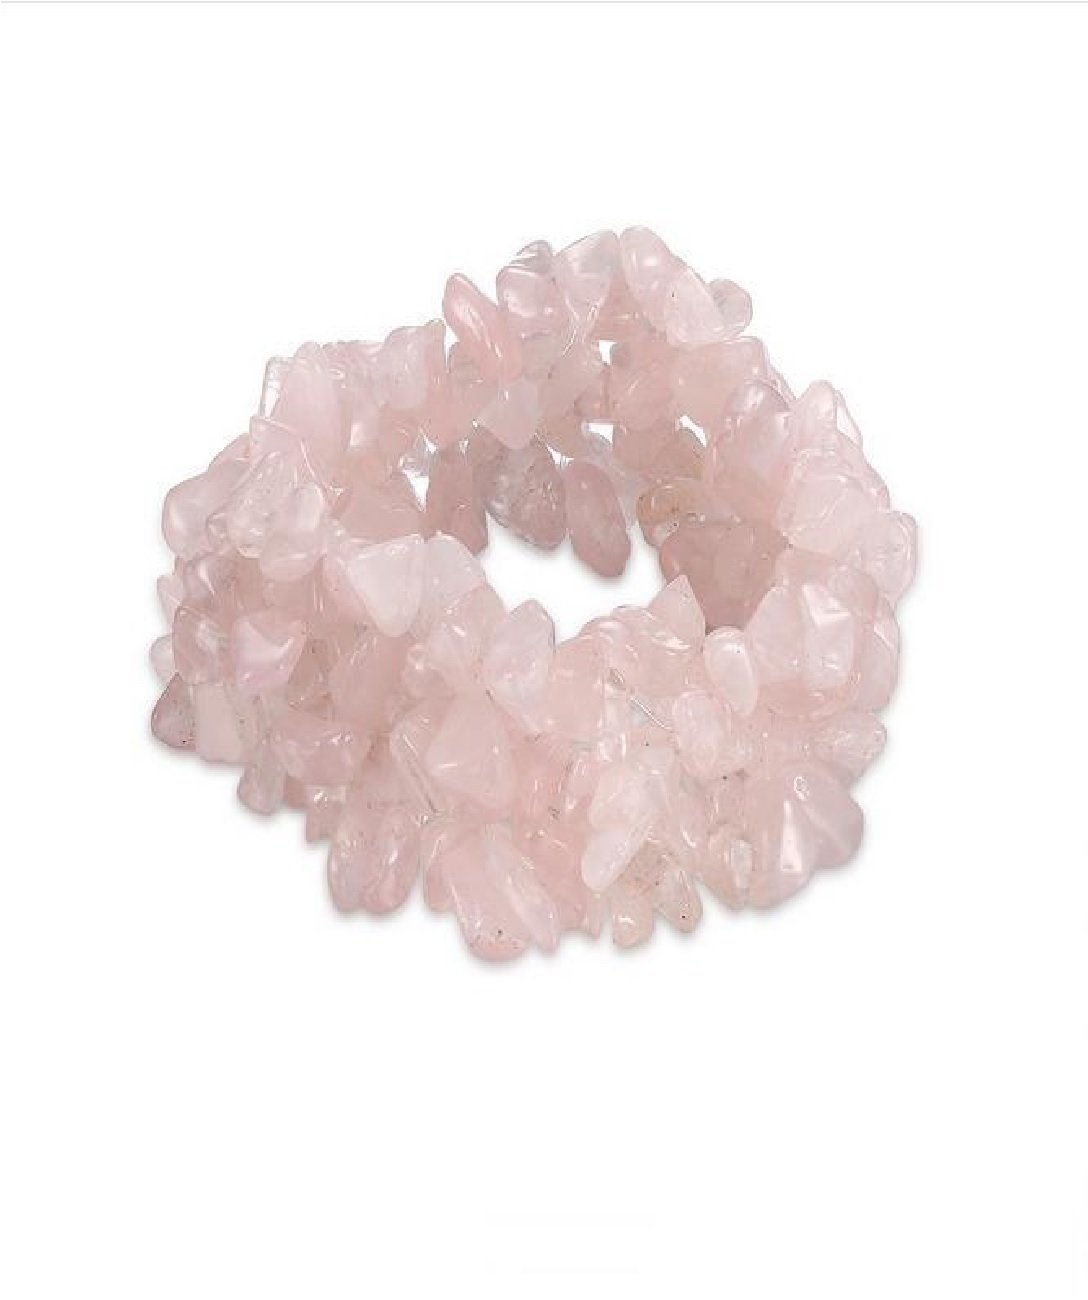 Elastic Natural Stone Multi layers Flourite Crystal Stone Bead Bracelet